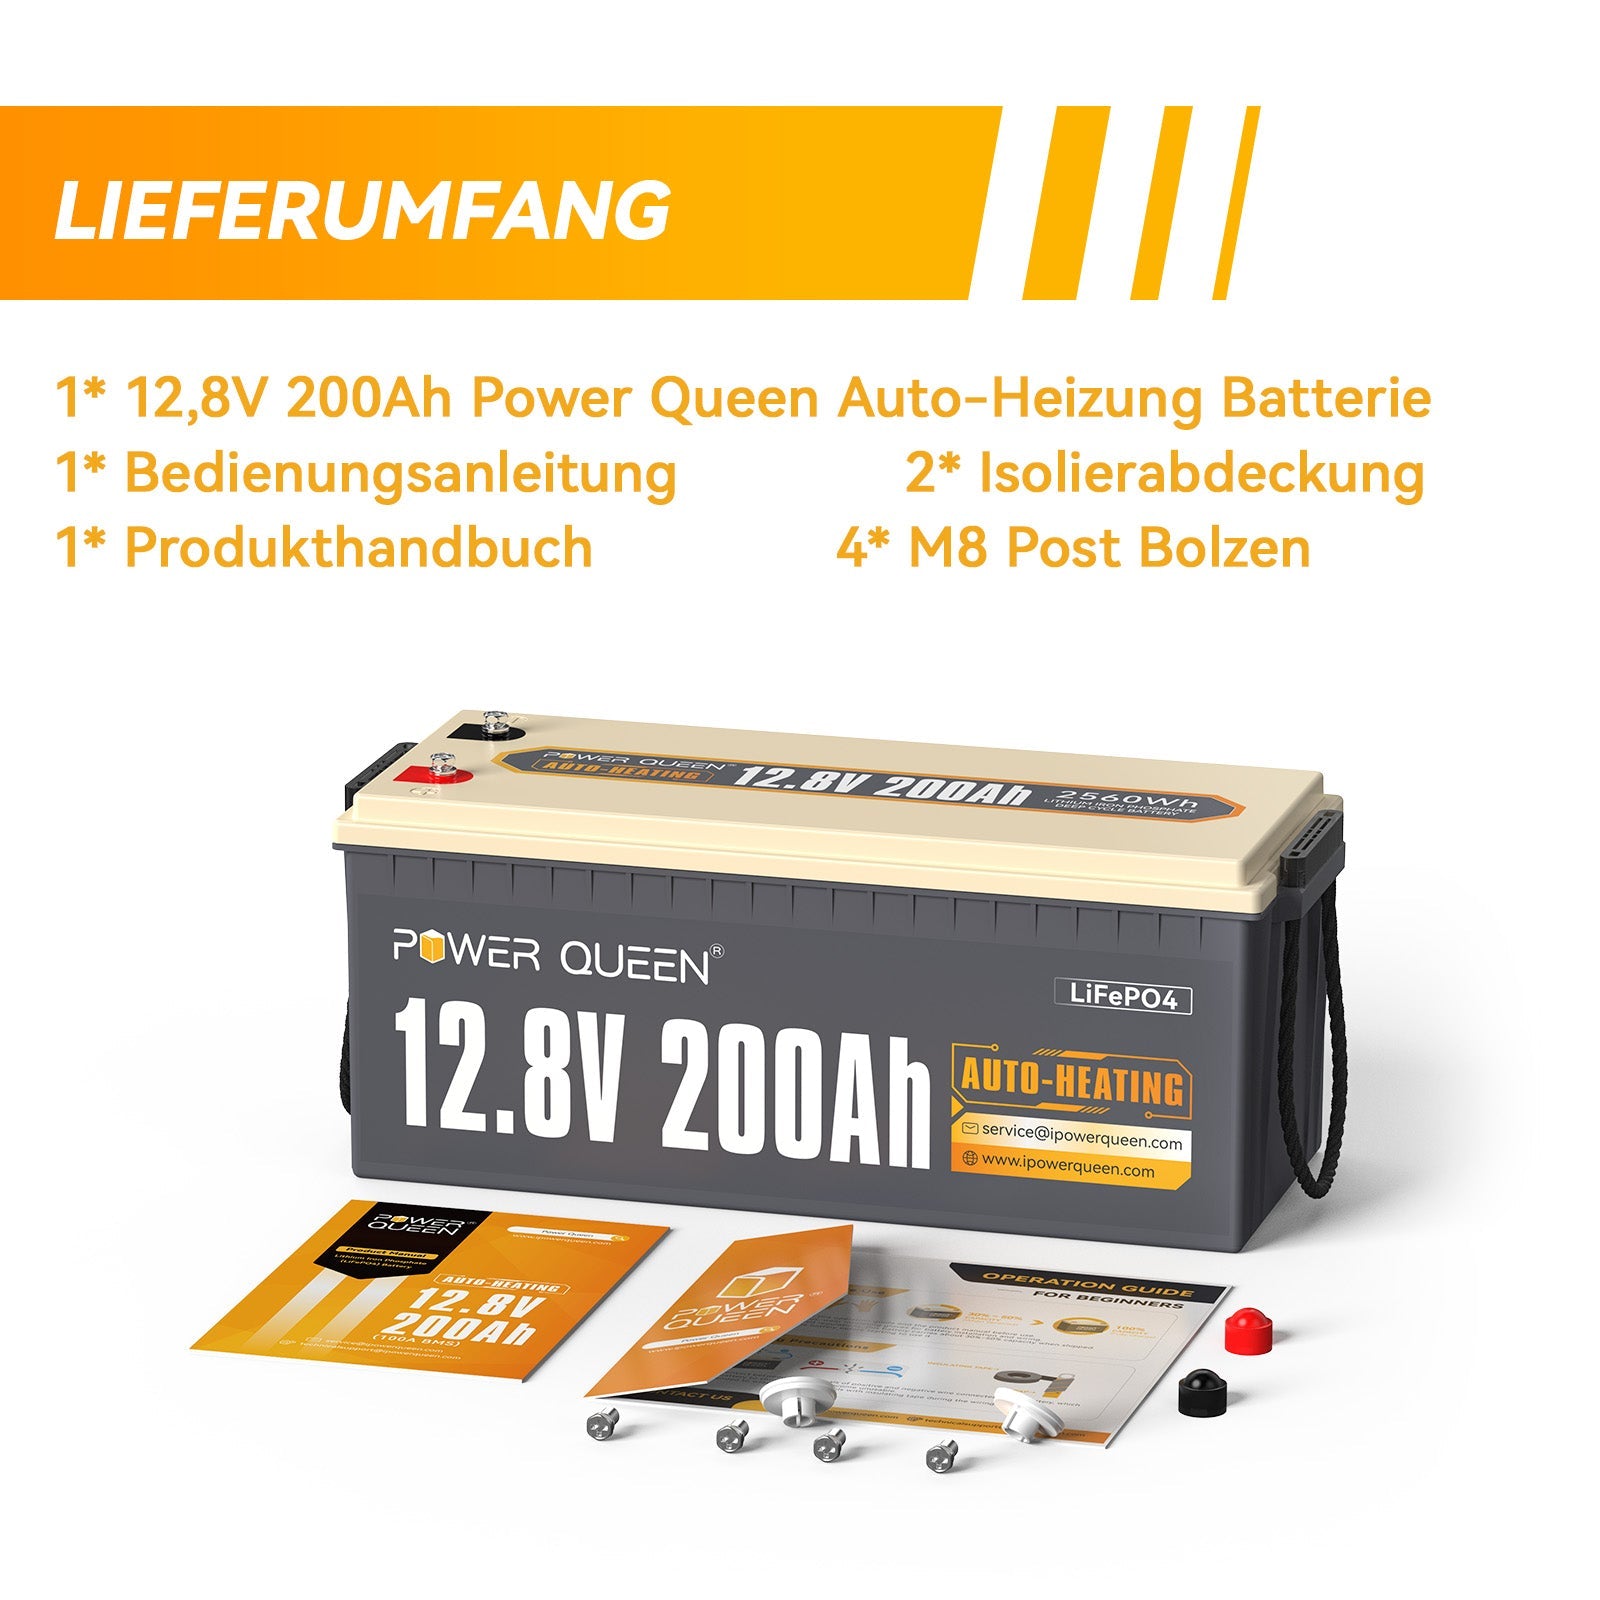 Come nuovo: batteria LiFePO4 autoriscaldante Power Queen 12,8 V 200 Ah, BMS 100 A integrato